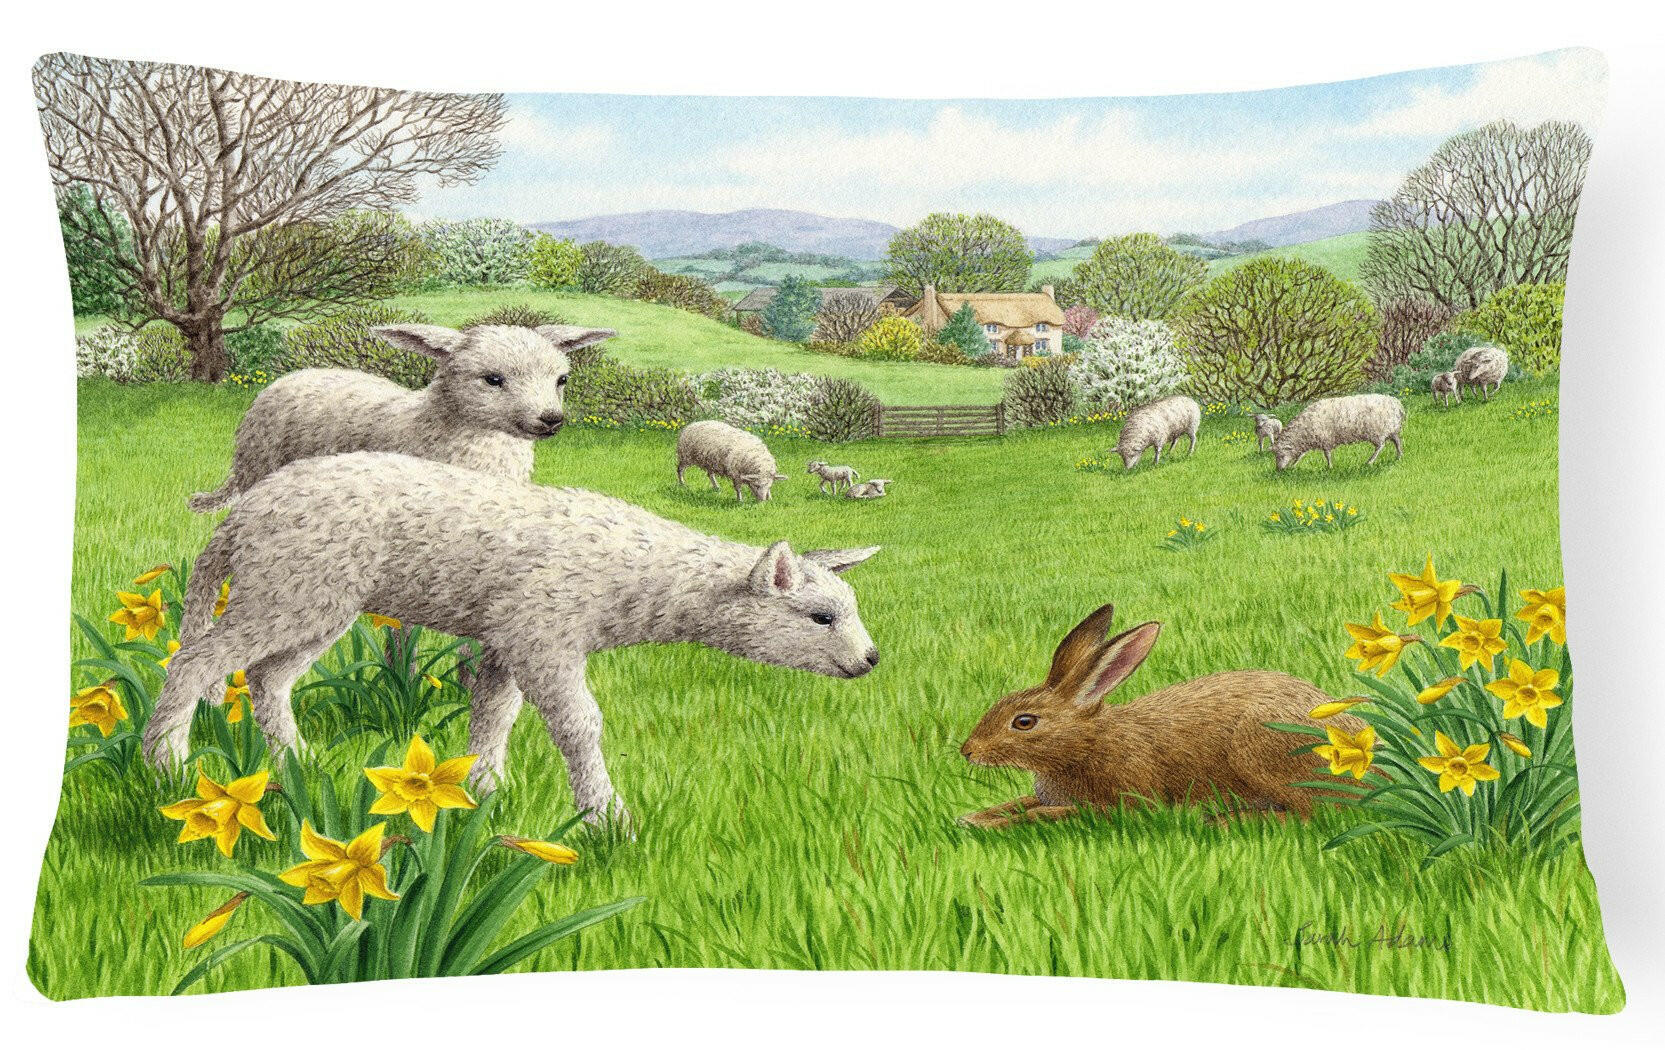 Lambs, Sheep and Rabbit Hare Fabric Decorative Pillow ASA2179PW1216 by Caroline's Treasures